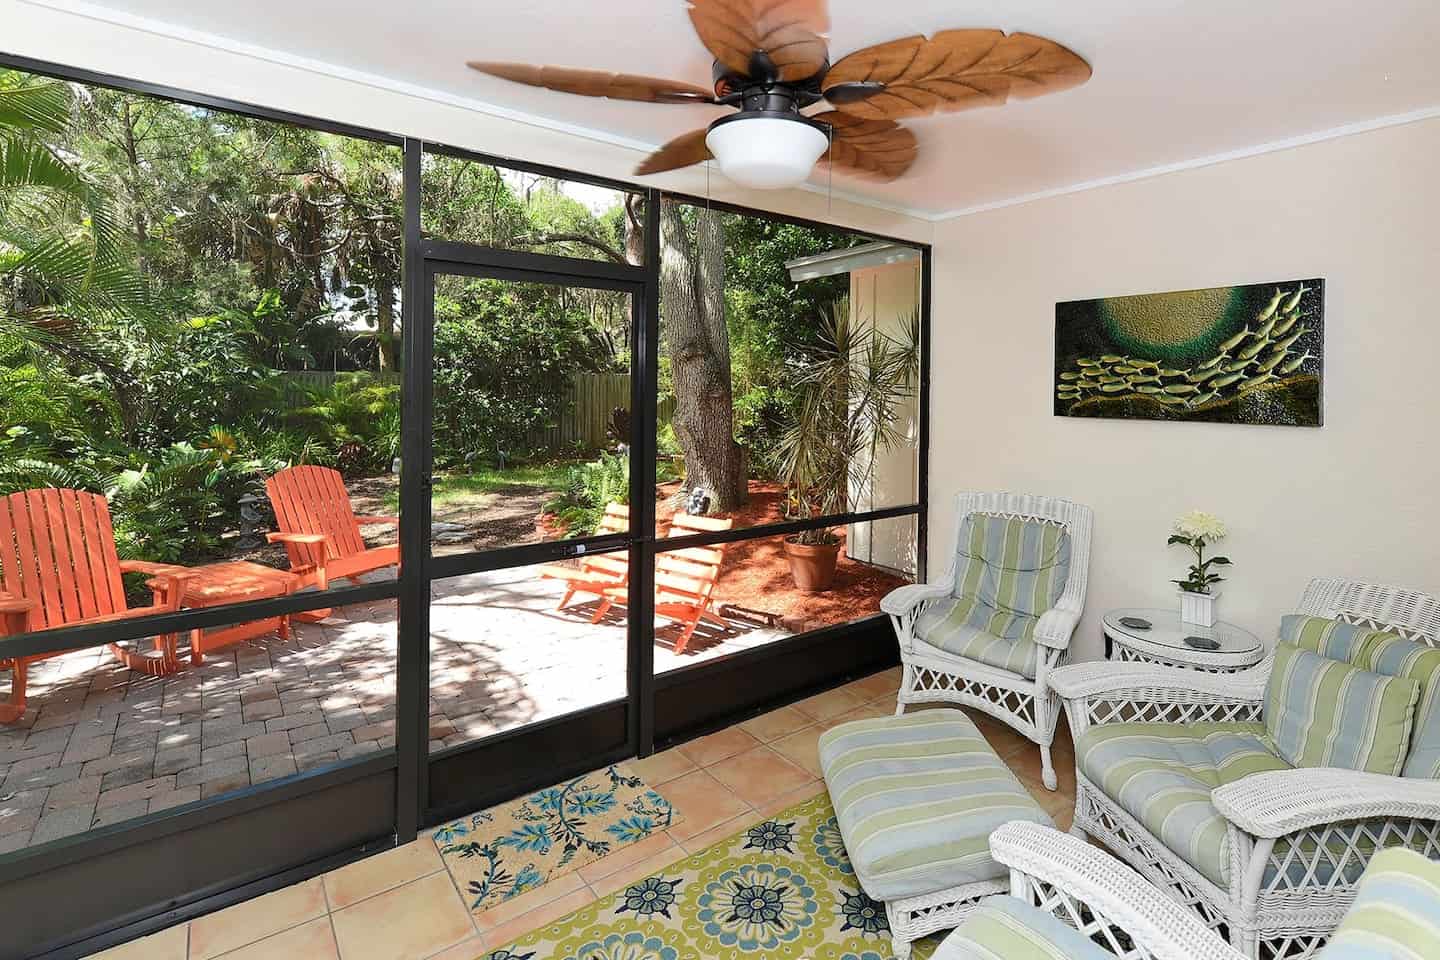 Image of Airbnb rental in Sarasota